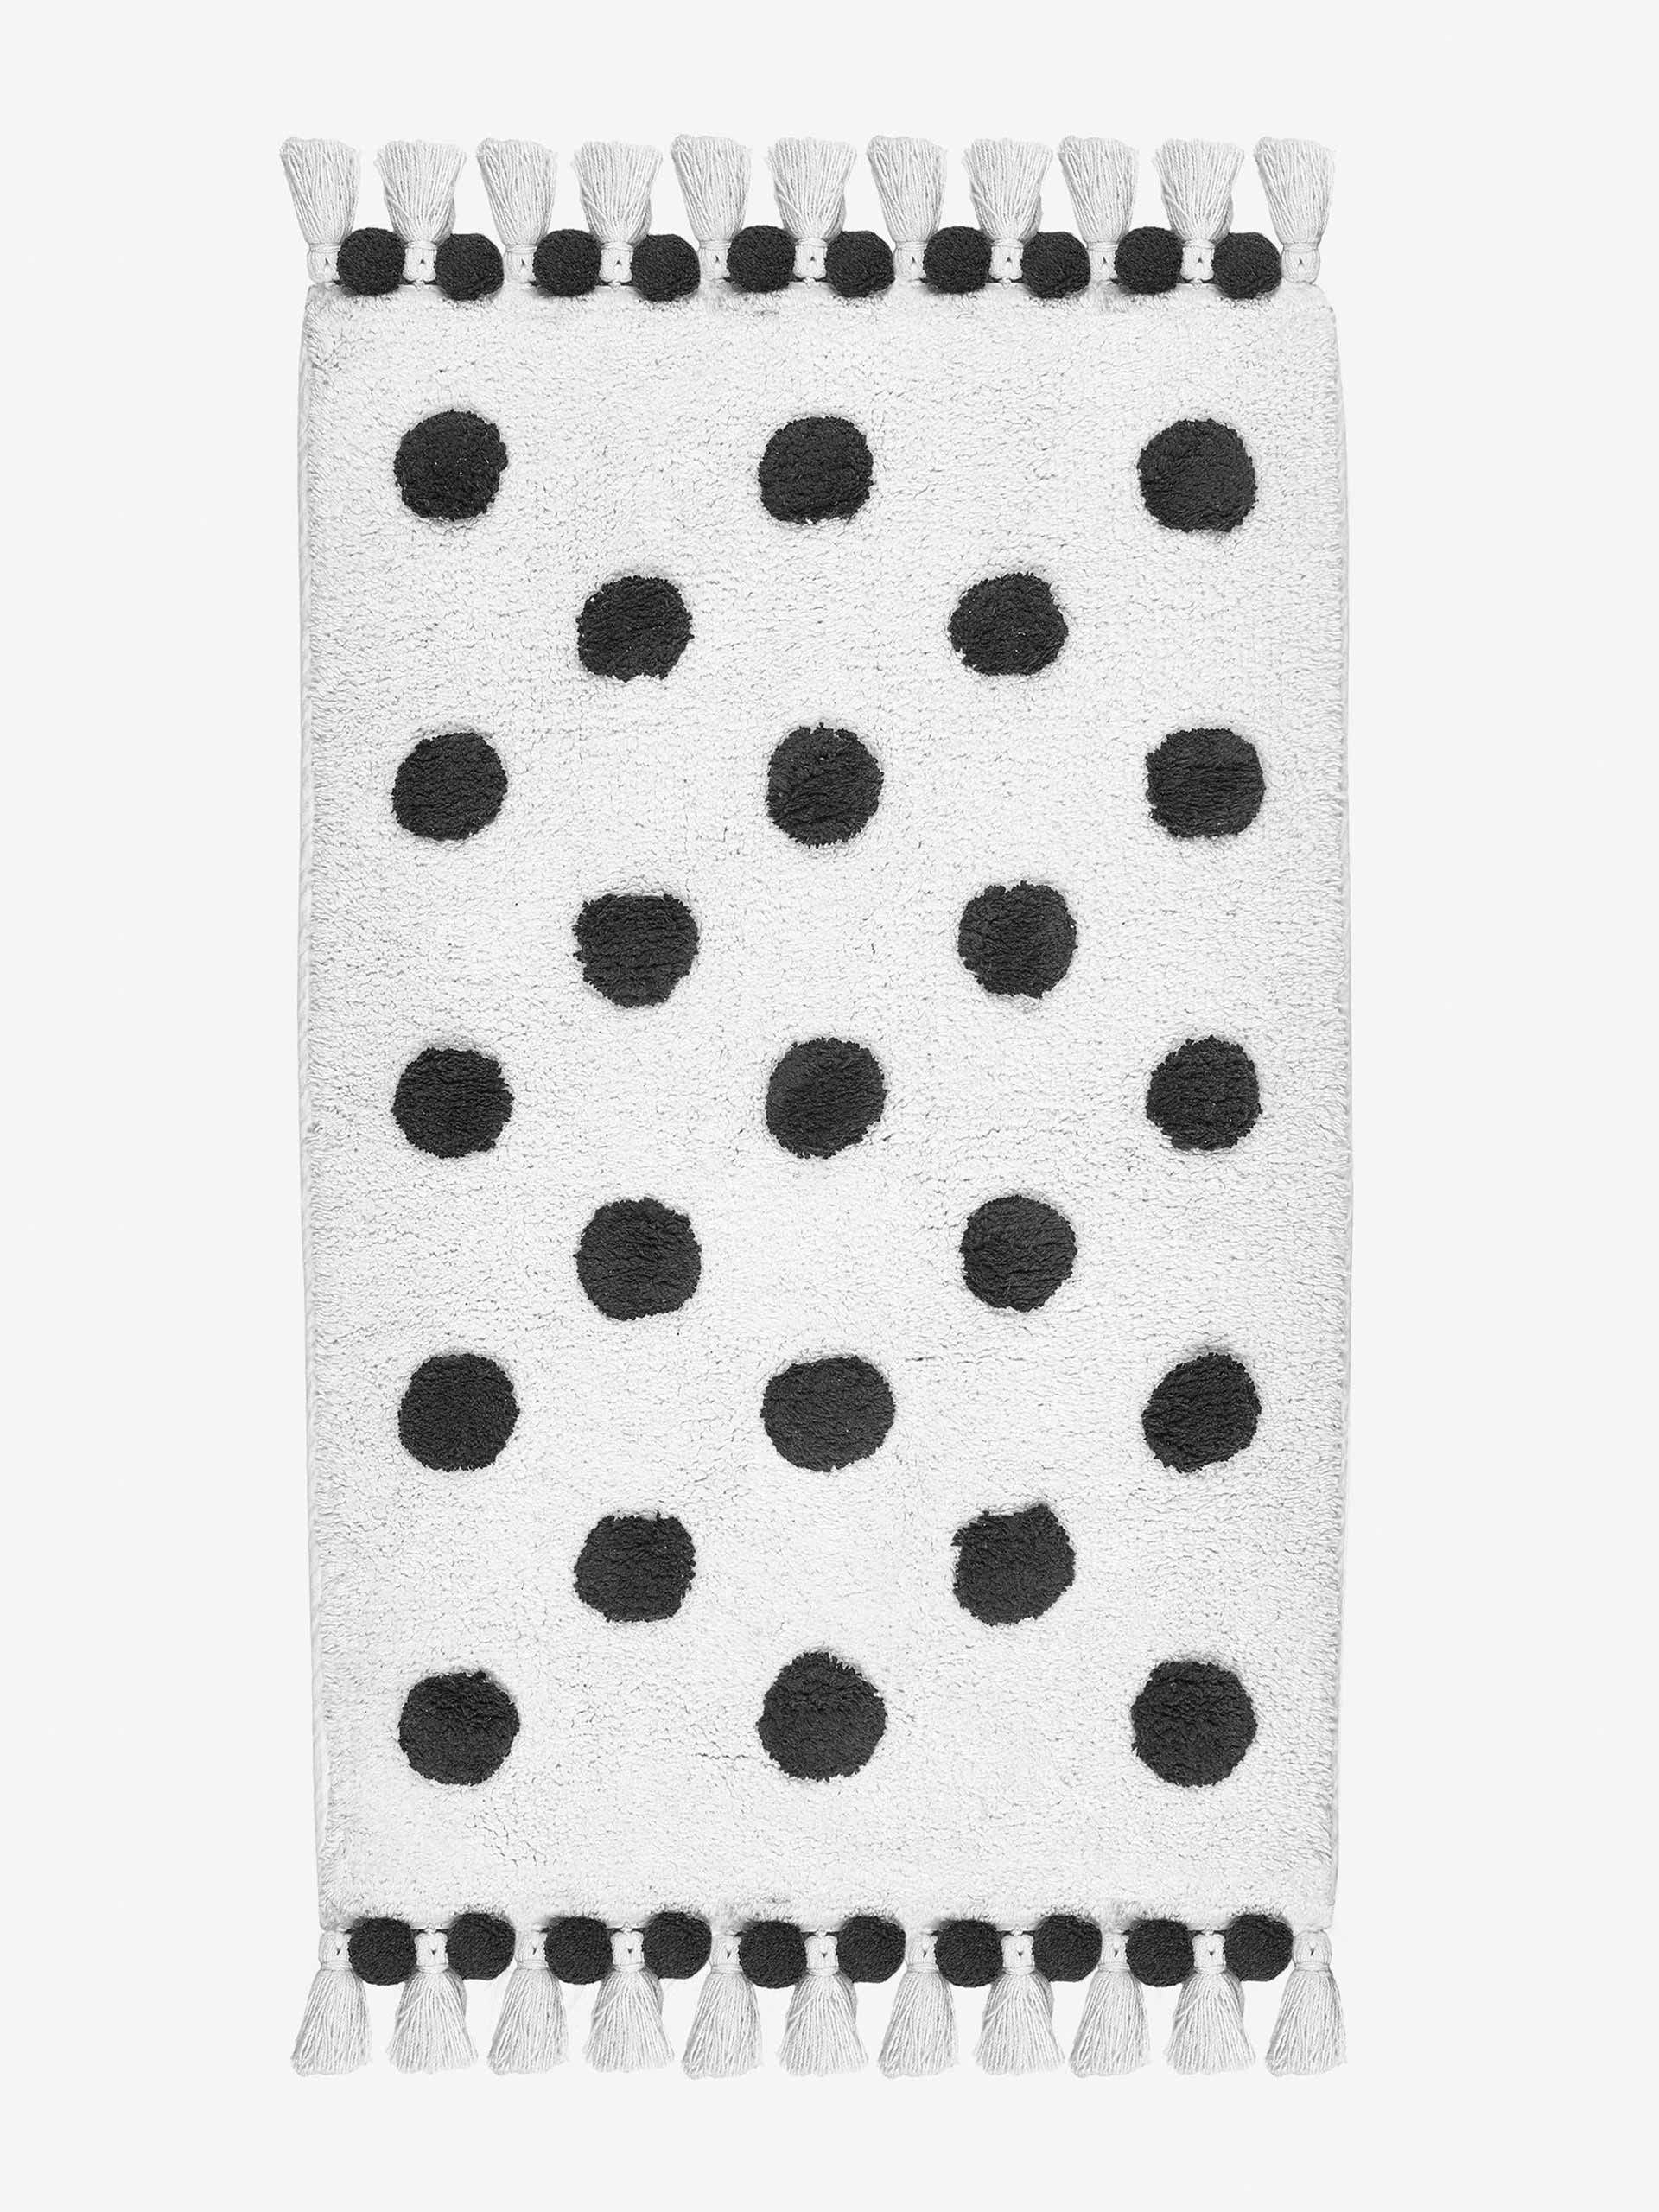 Black and white polka dot cotton bath mat